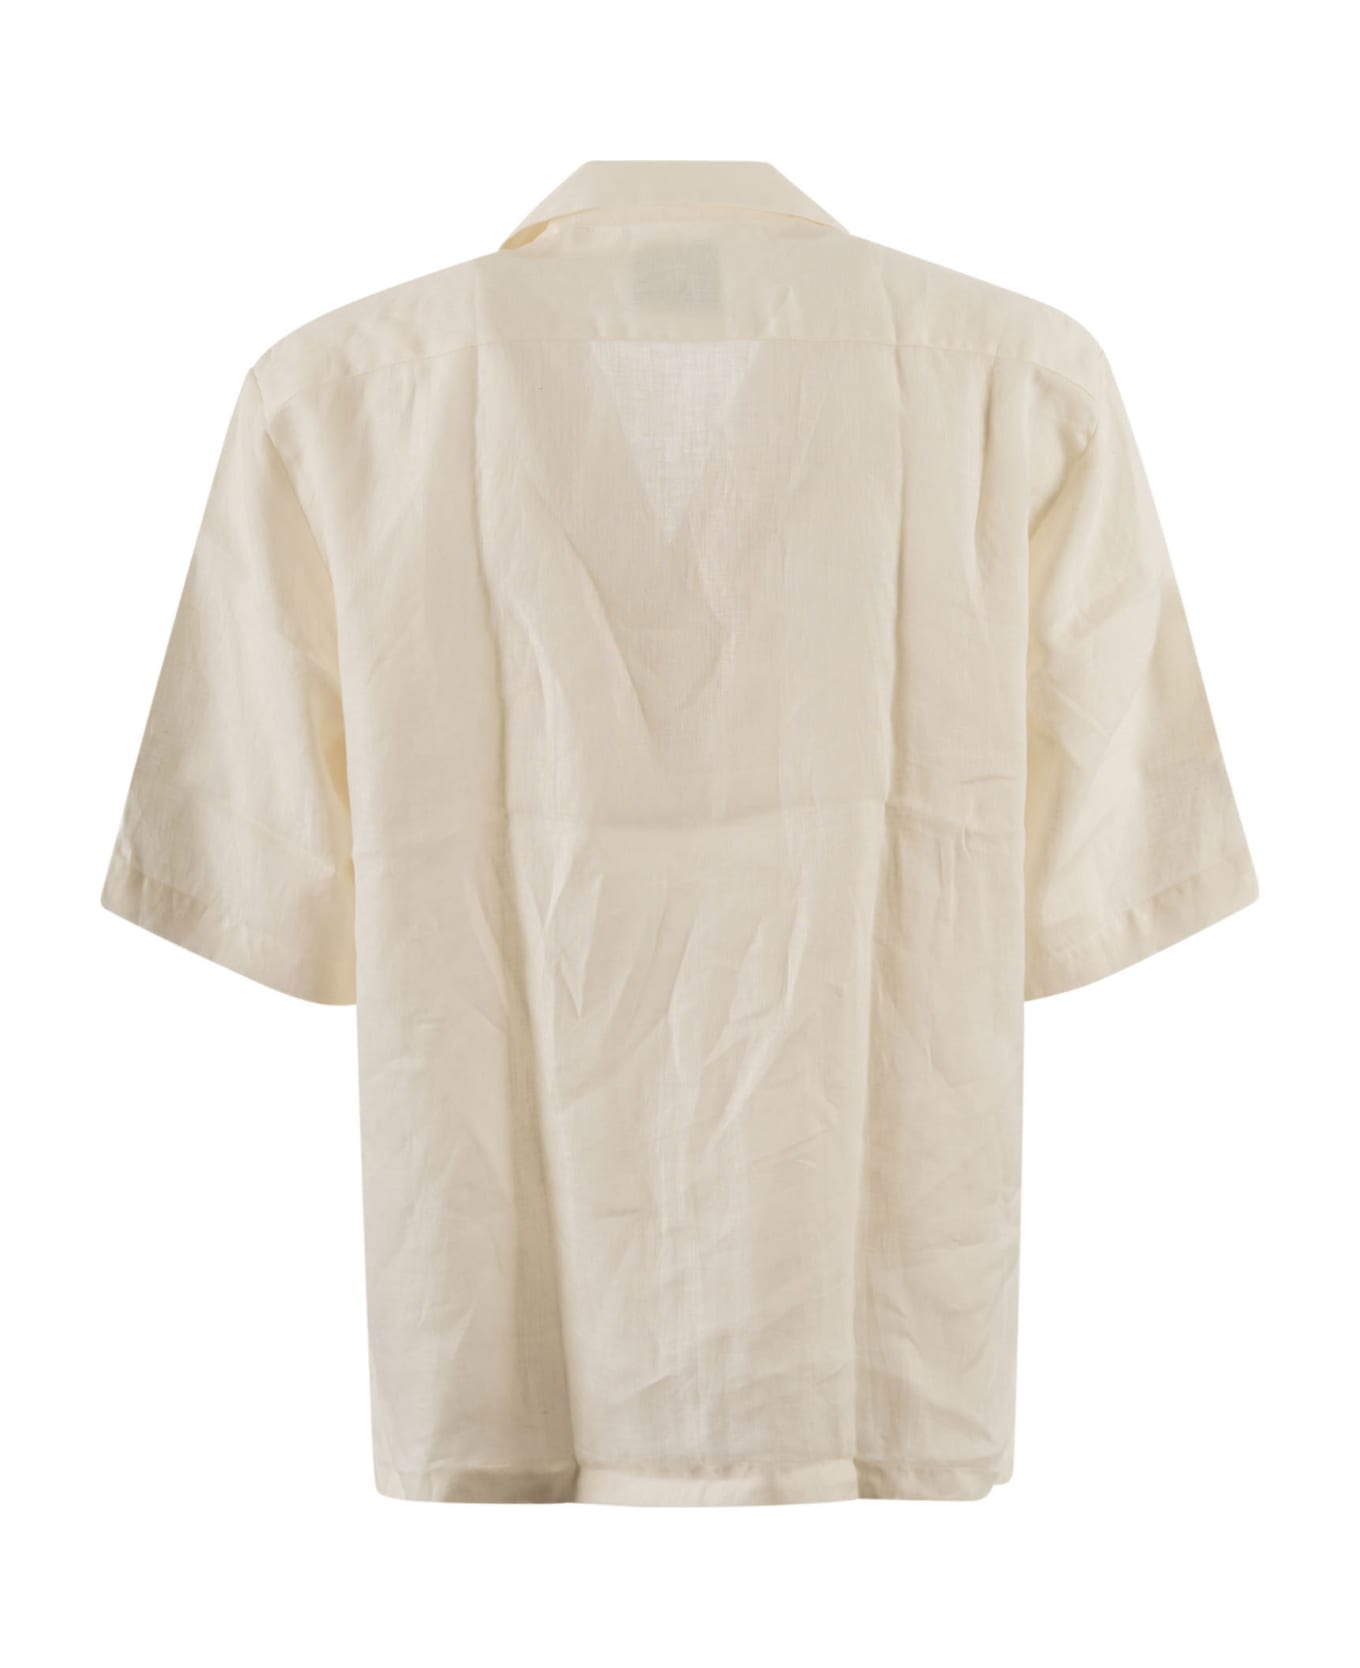 PT Torino Patched Pocket Plain Formal Shirt - C シャツ